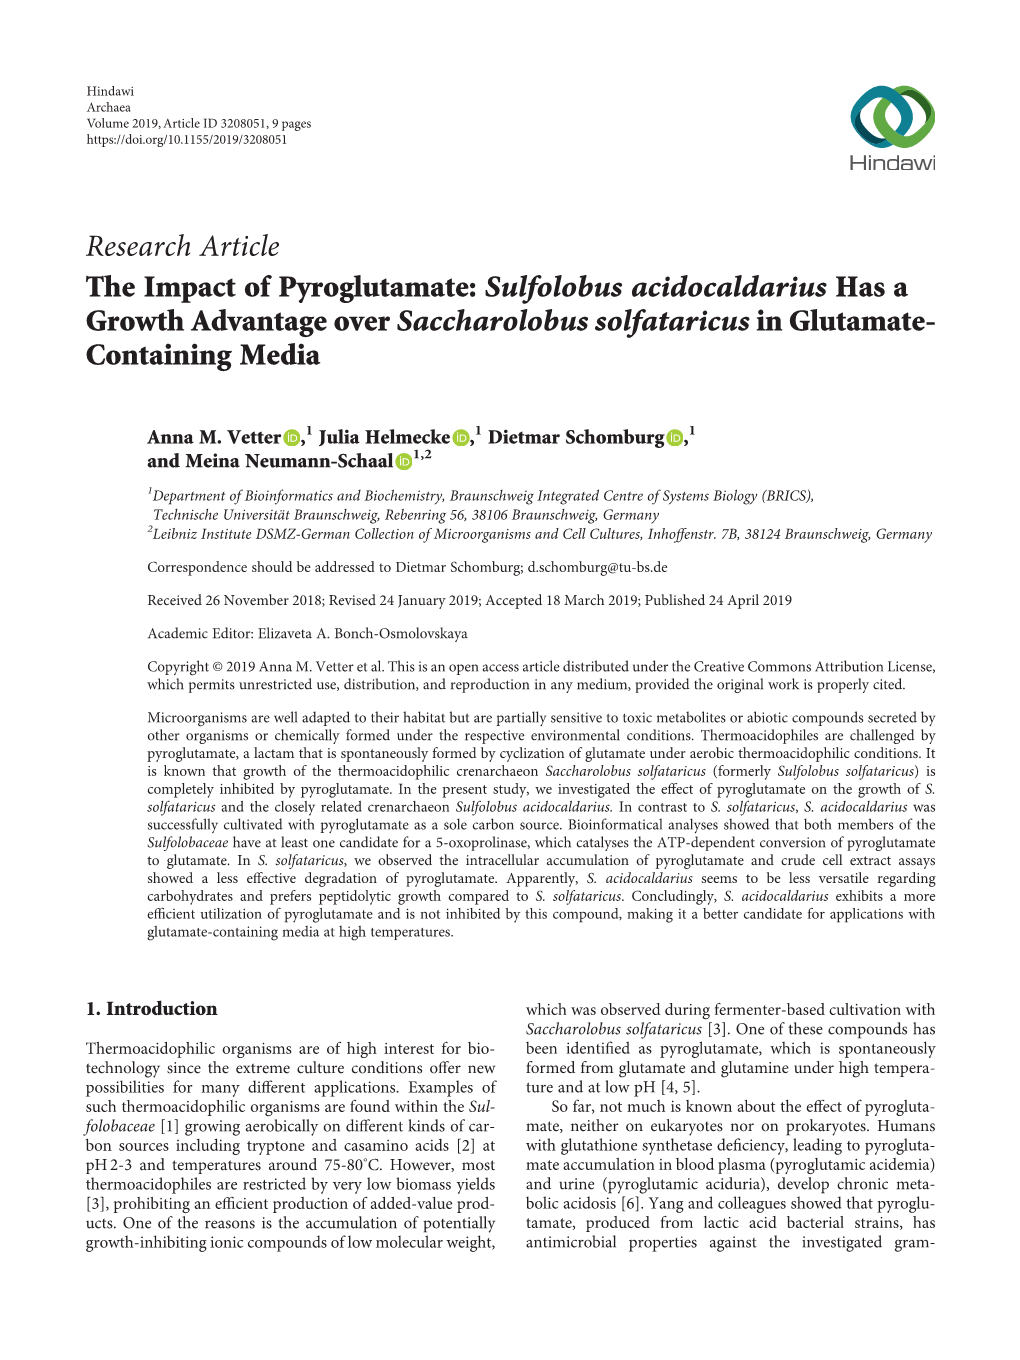 The Impact of Pyroglutamate: Sulfolobus Acidocaldarius Has a Growth Advantage Over Saccharolobus Solfataricus in Glutamate- Containing Media